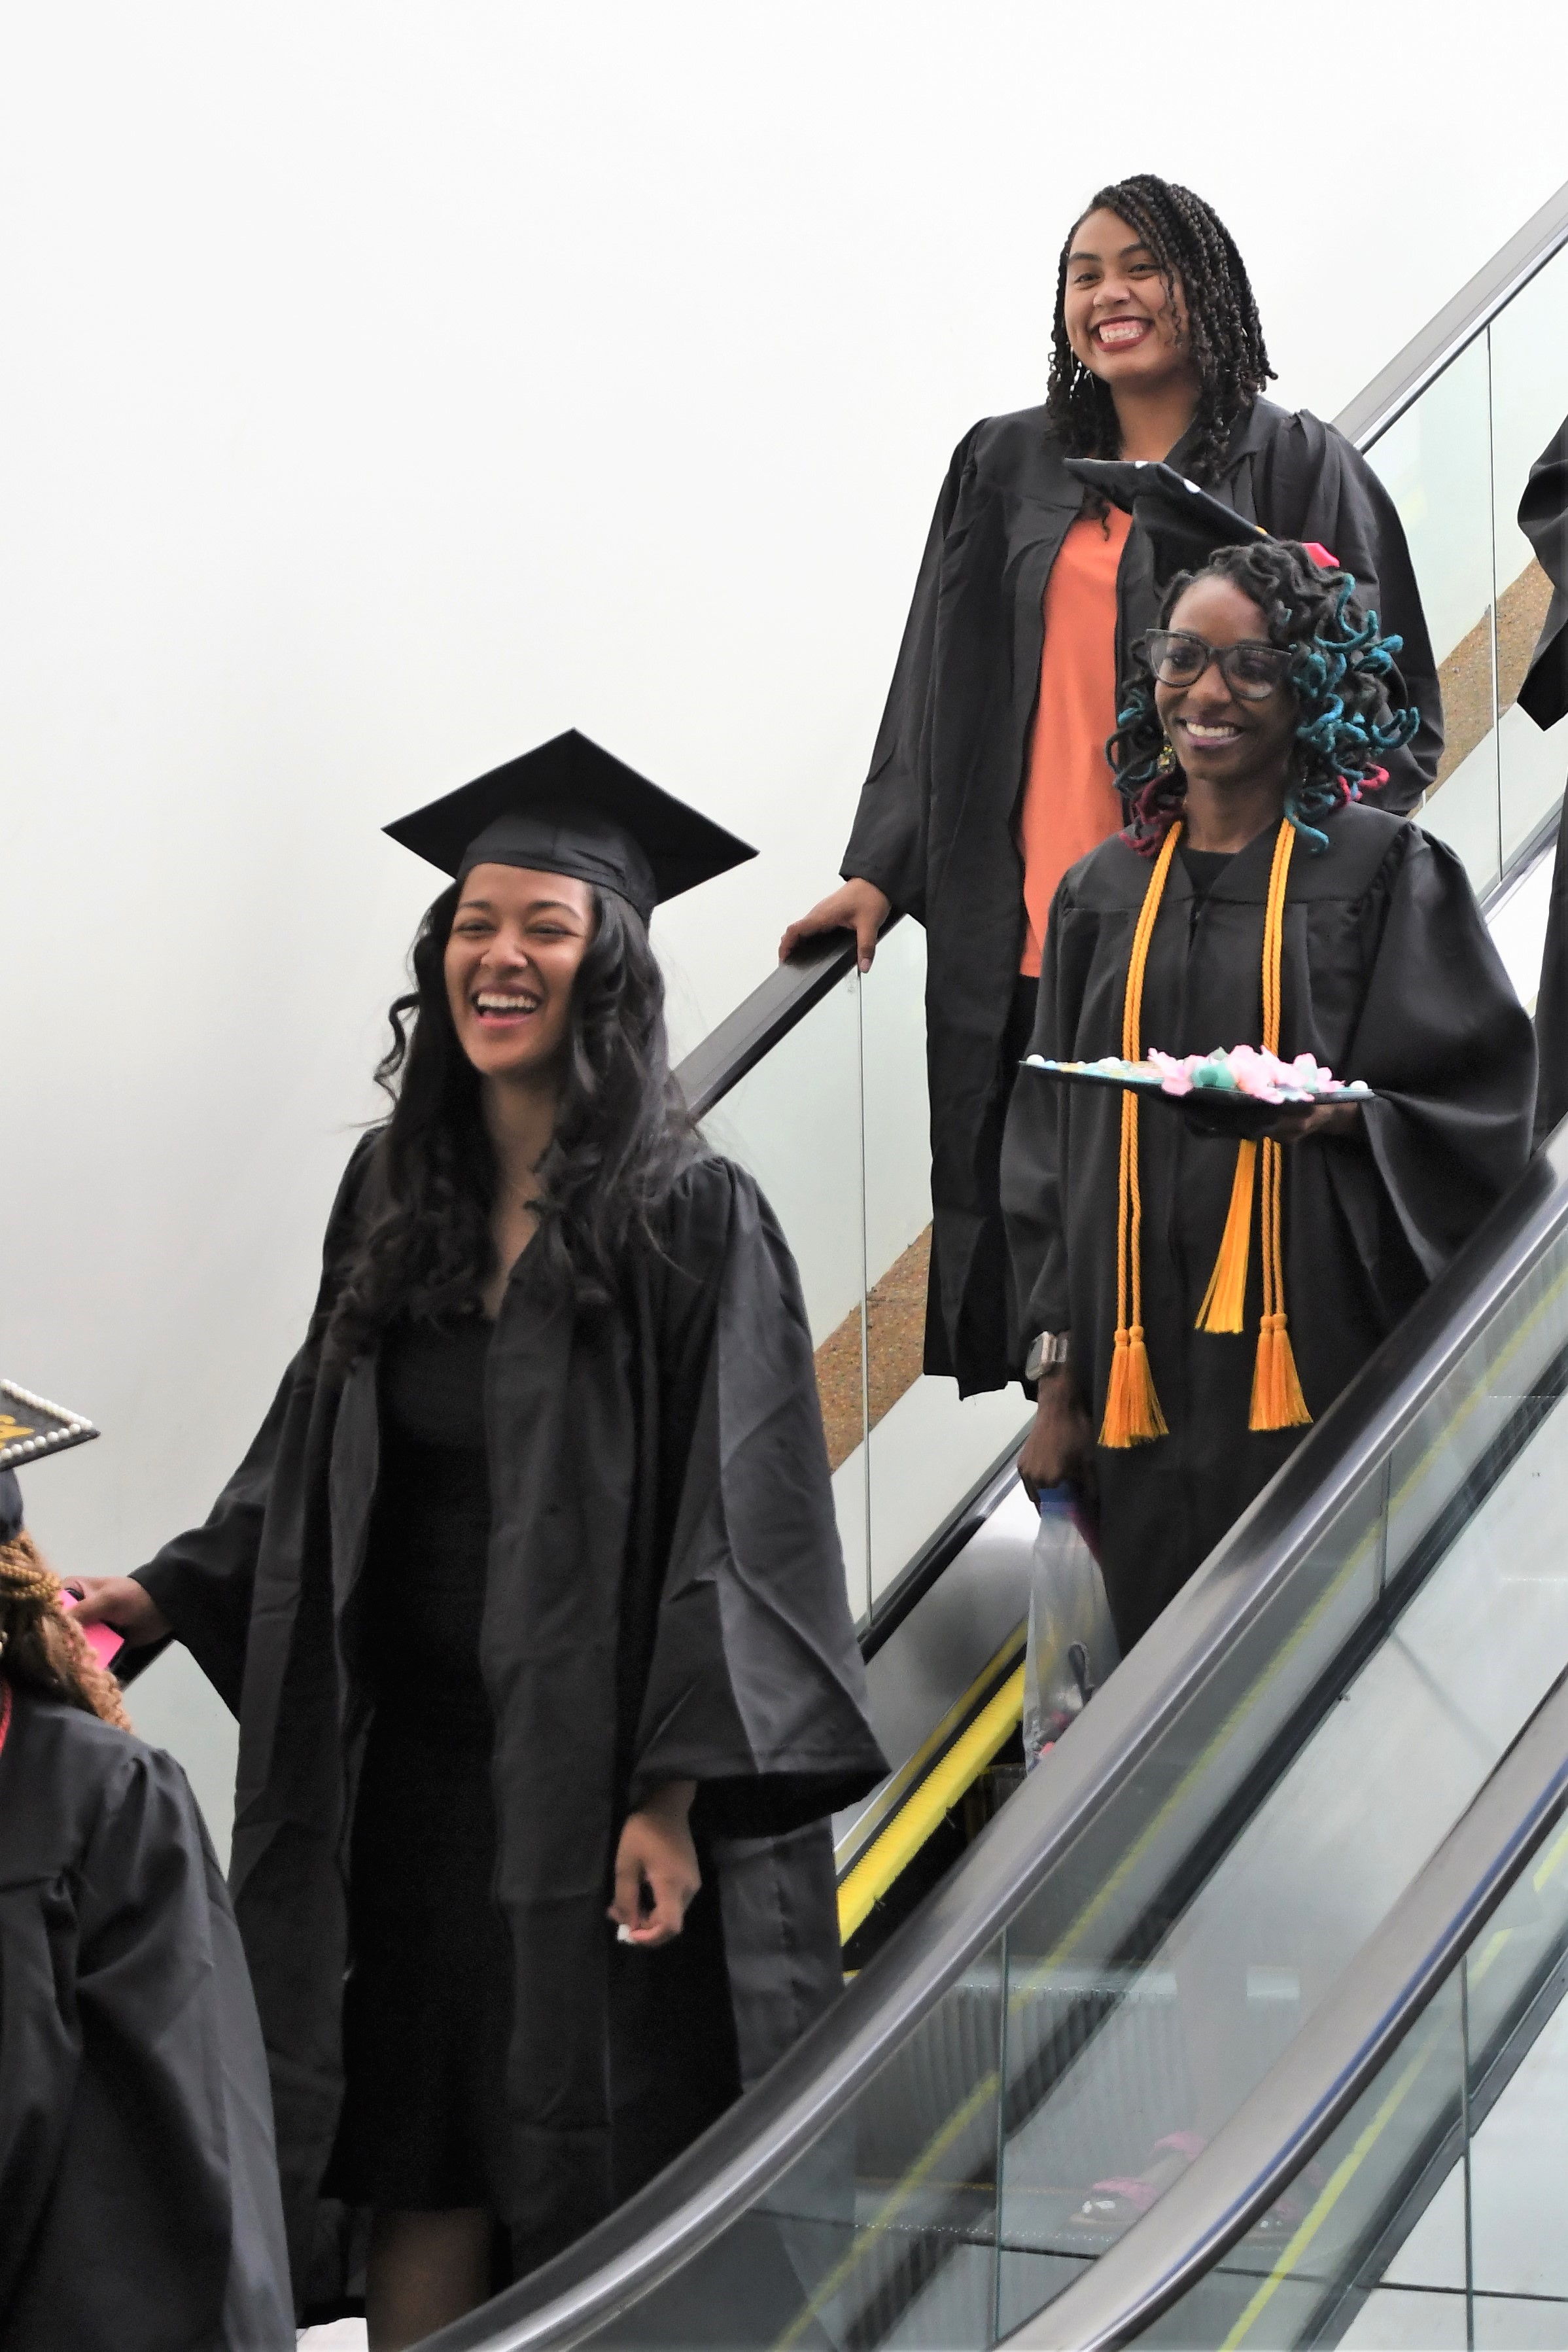 Graduates smile at the camera as they descend the escalator. 